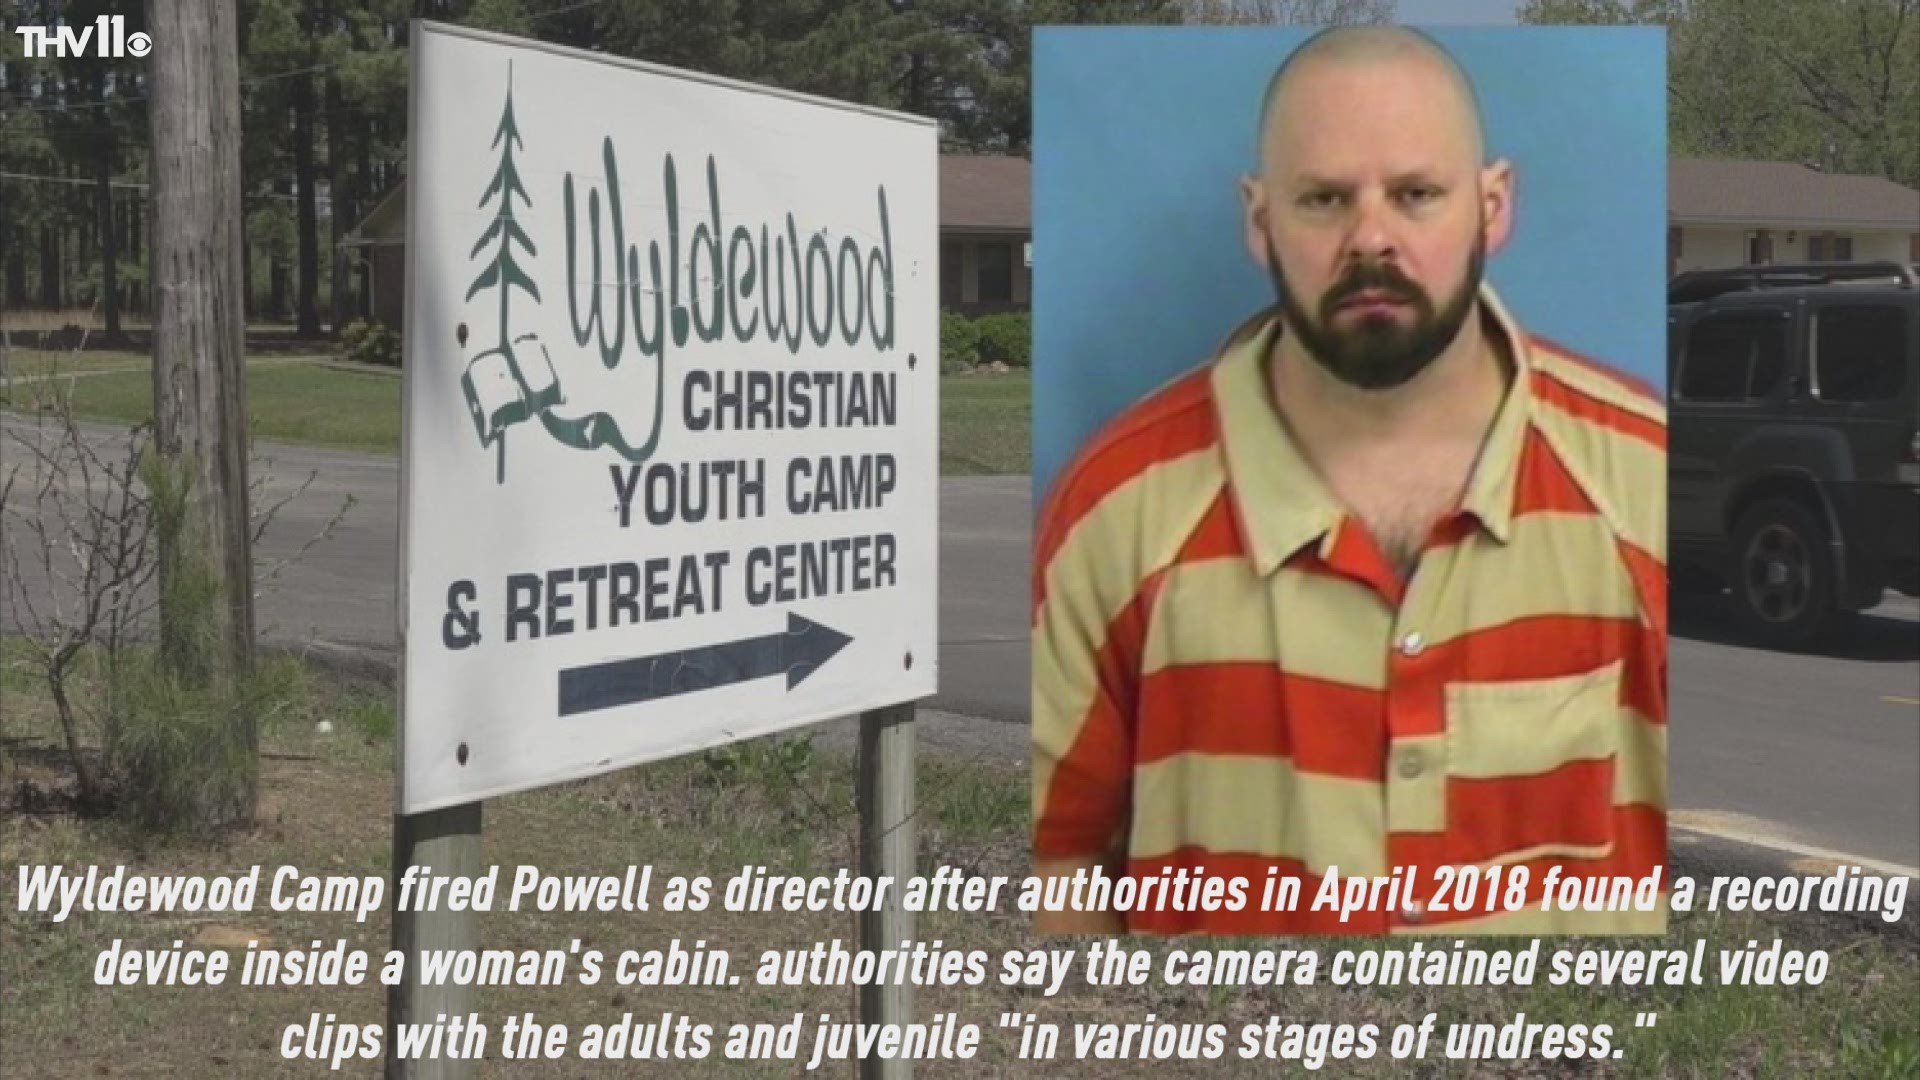 A former Camp Wyldewood director accused of video voyeurism has been sentenced.